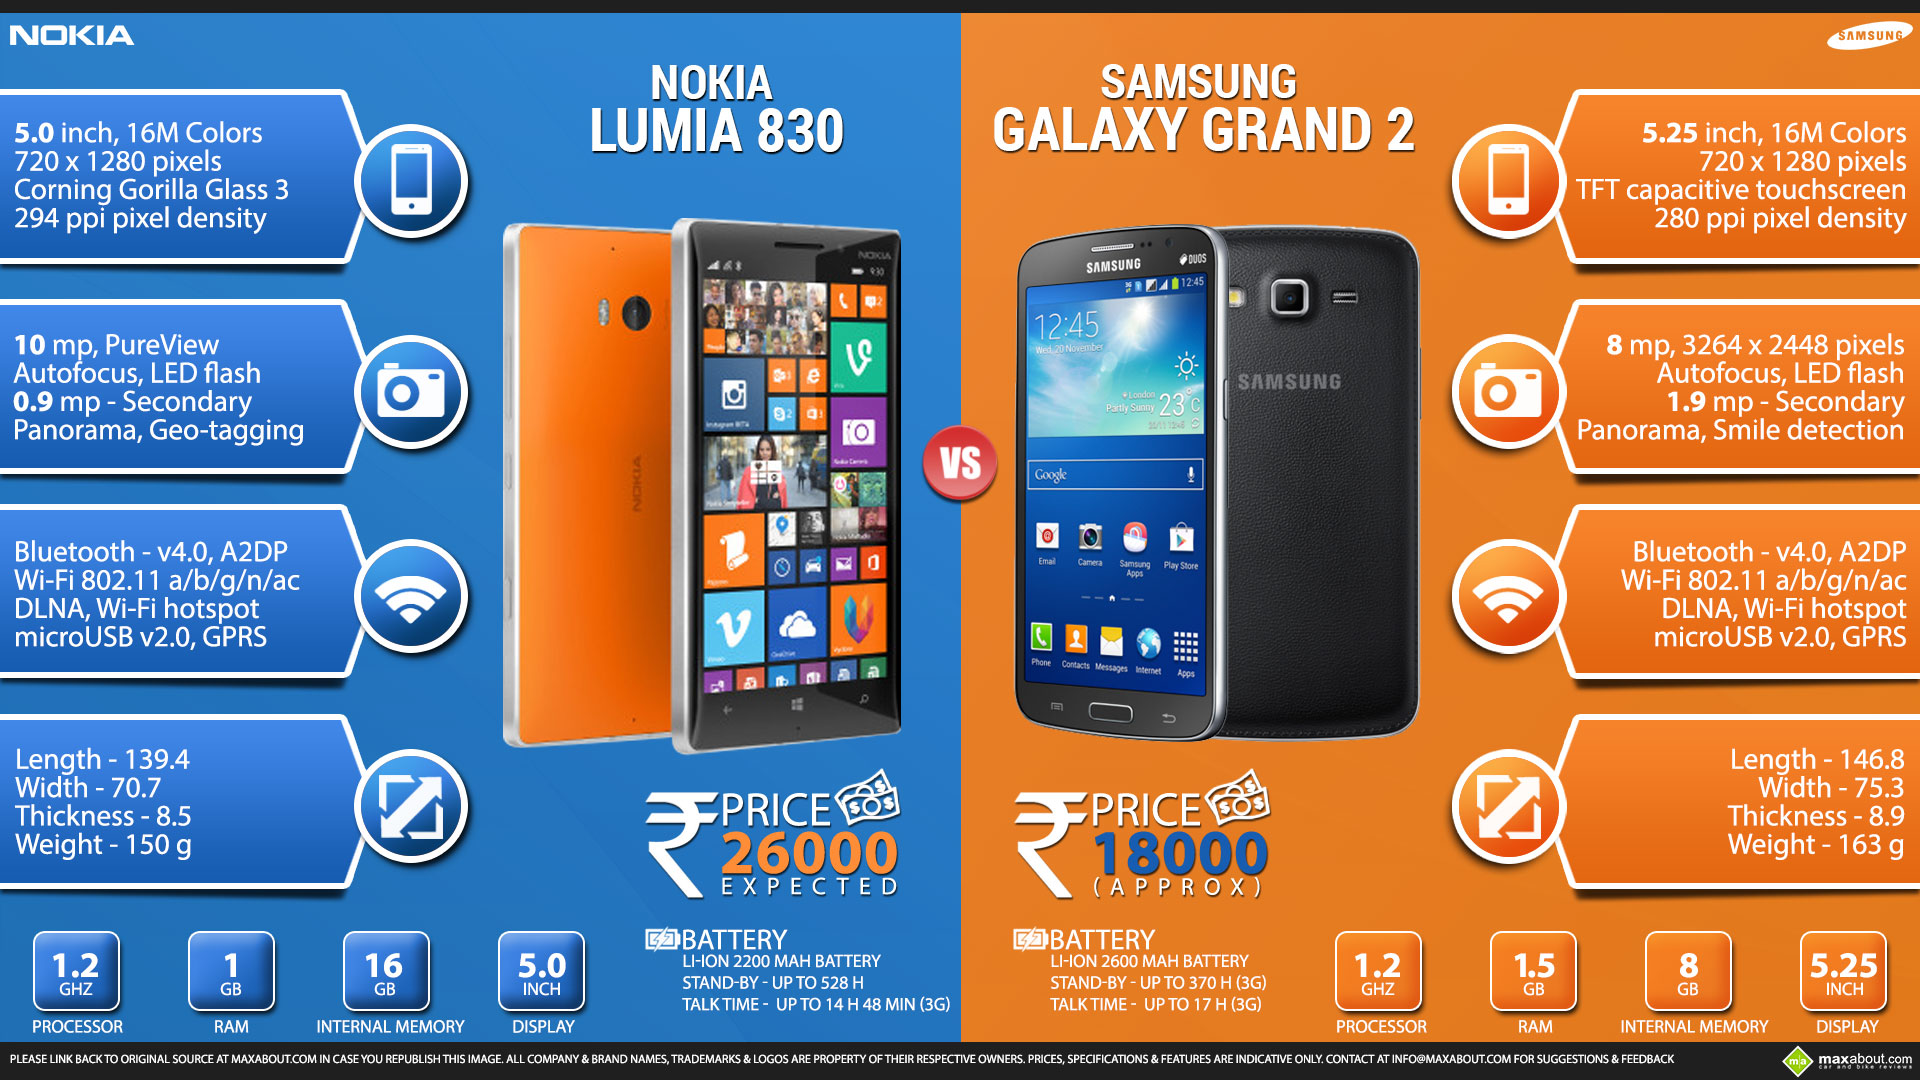 Nokia Lumia 830 vs. Samsung Galaxy Grand 2